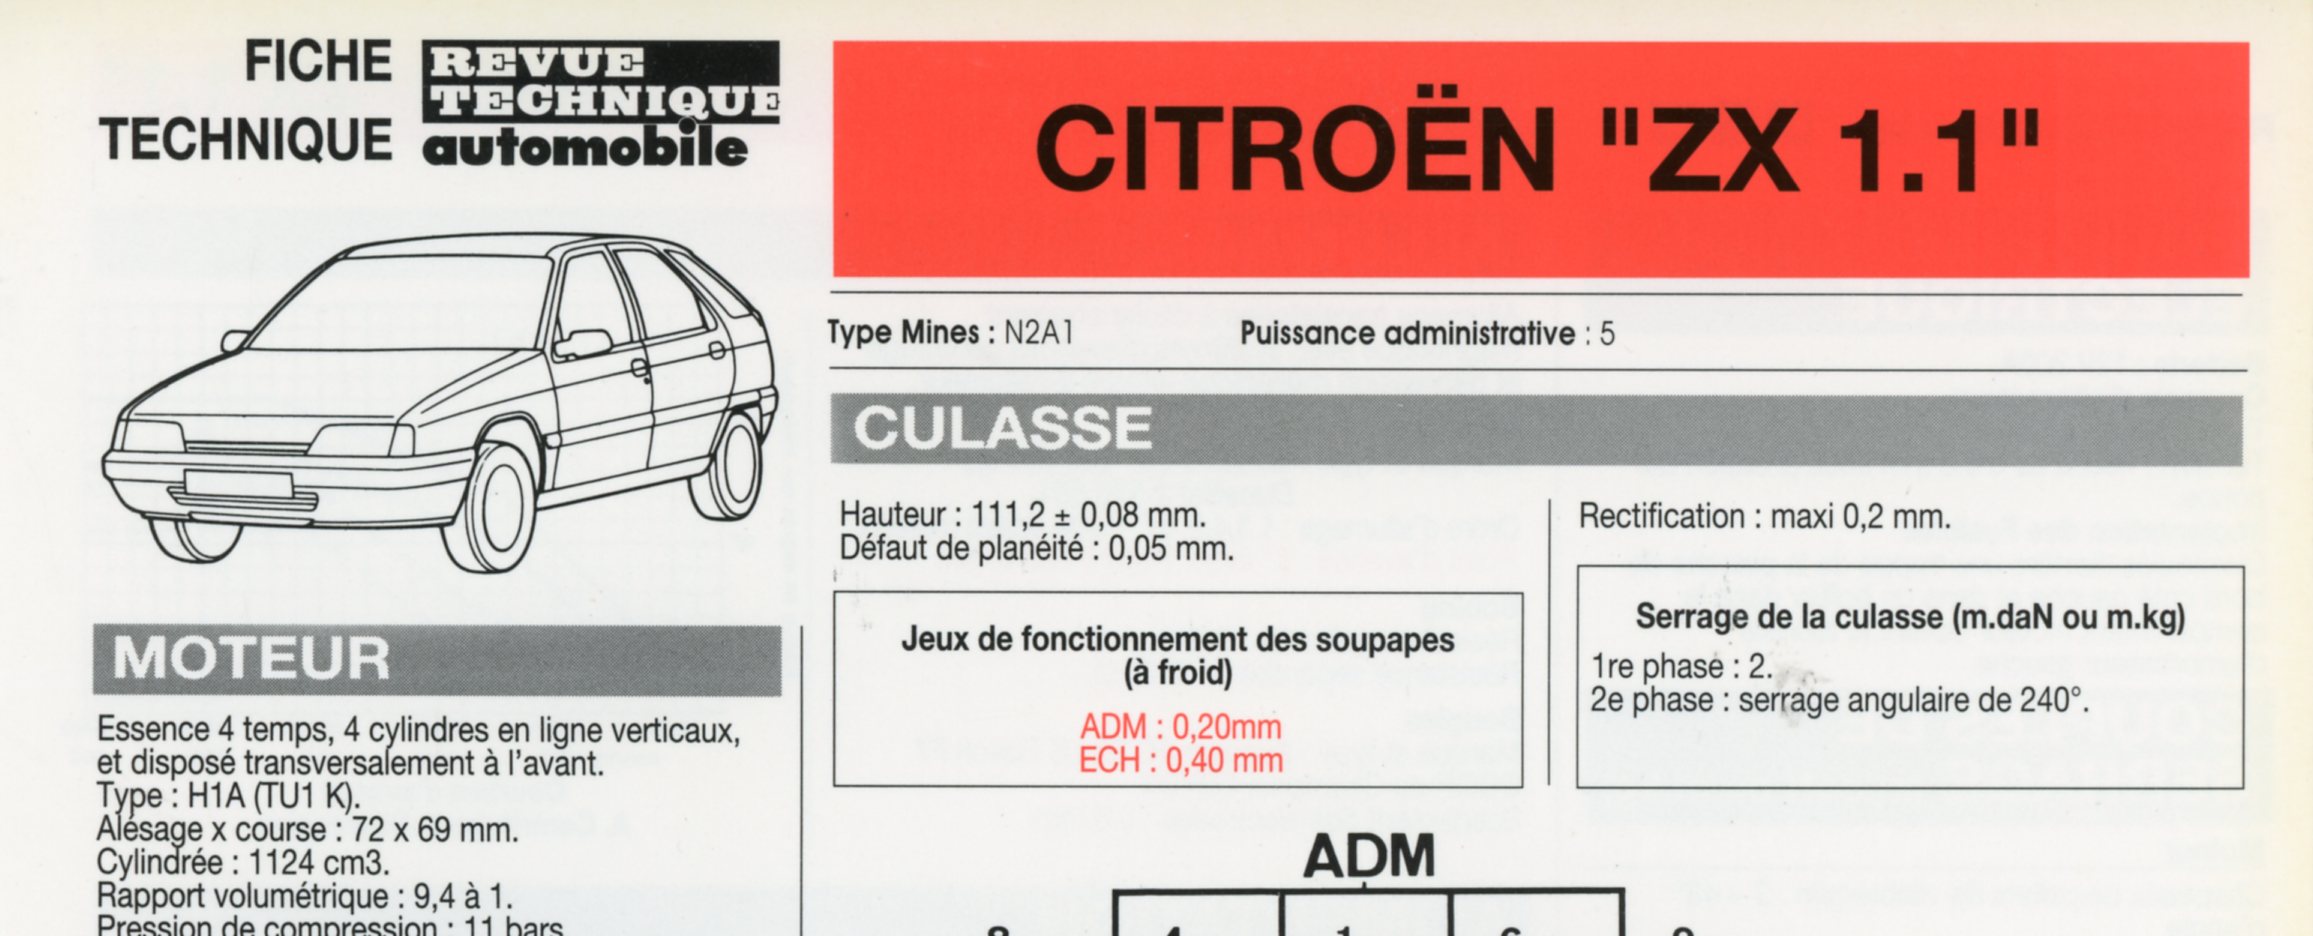 FICHE TECHNIQUE CITROËN ZX 1.1 - FICHE RTA AUTOMOBILE 1993